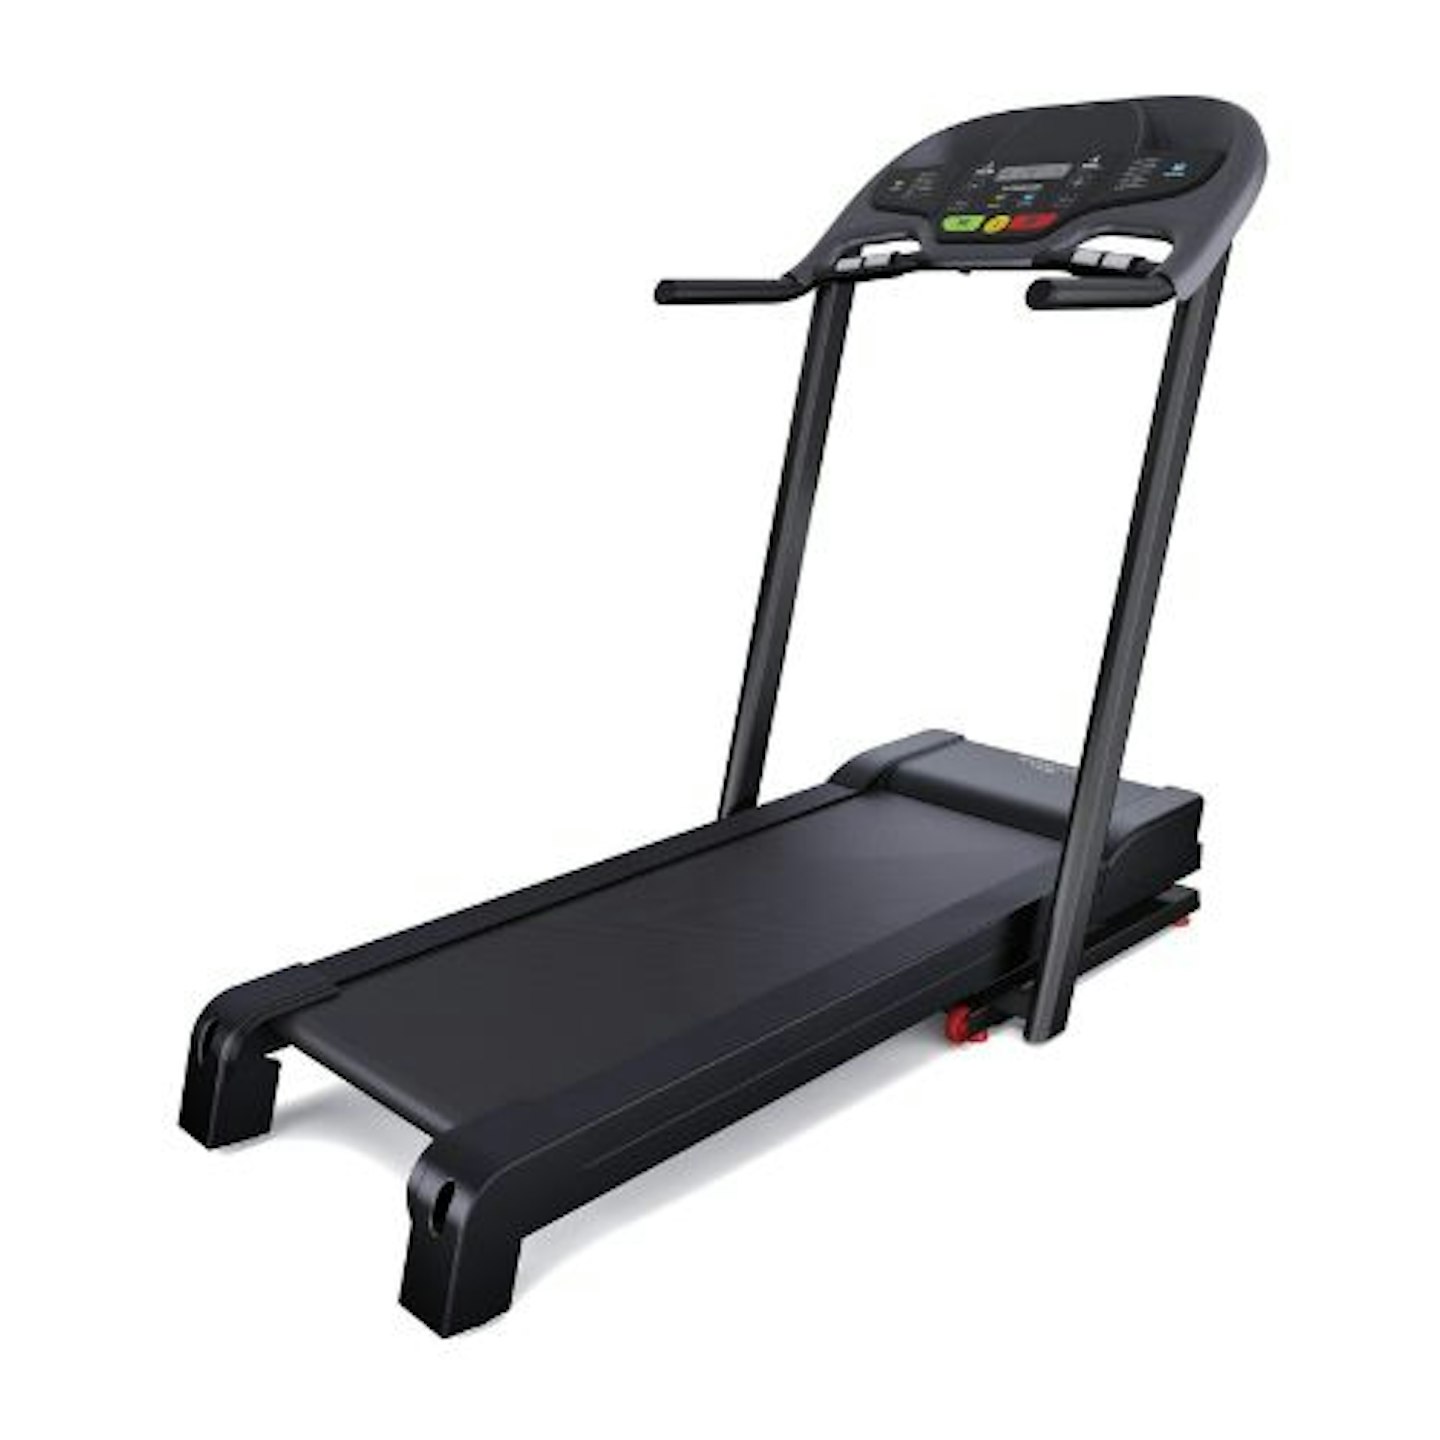 DOMYOS Comfortable Treadmill T520B - 13 km/h